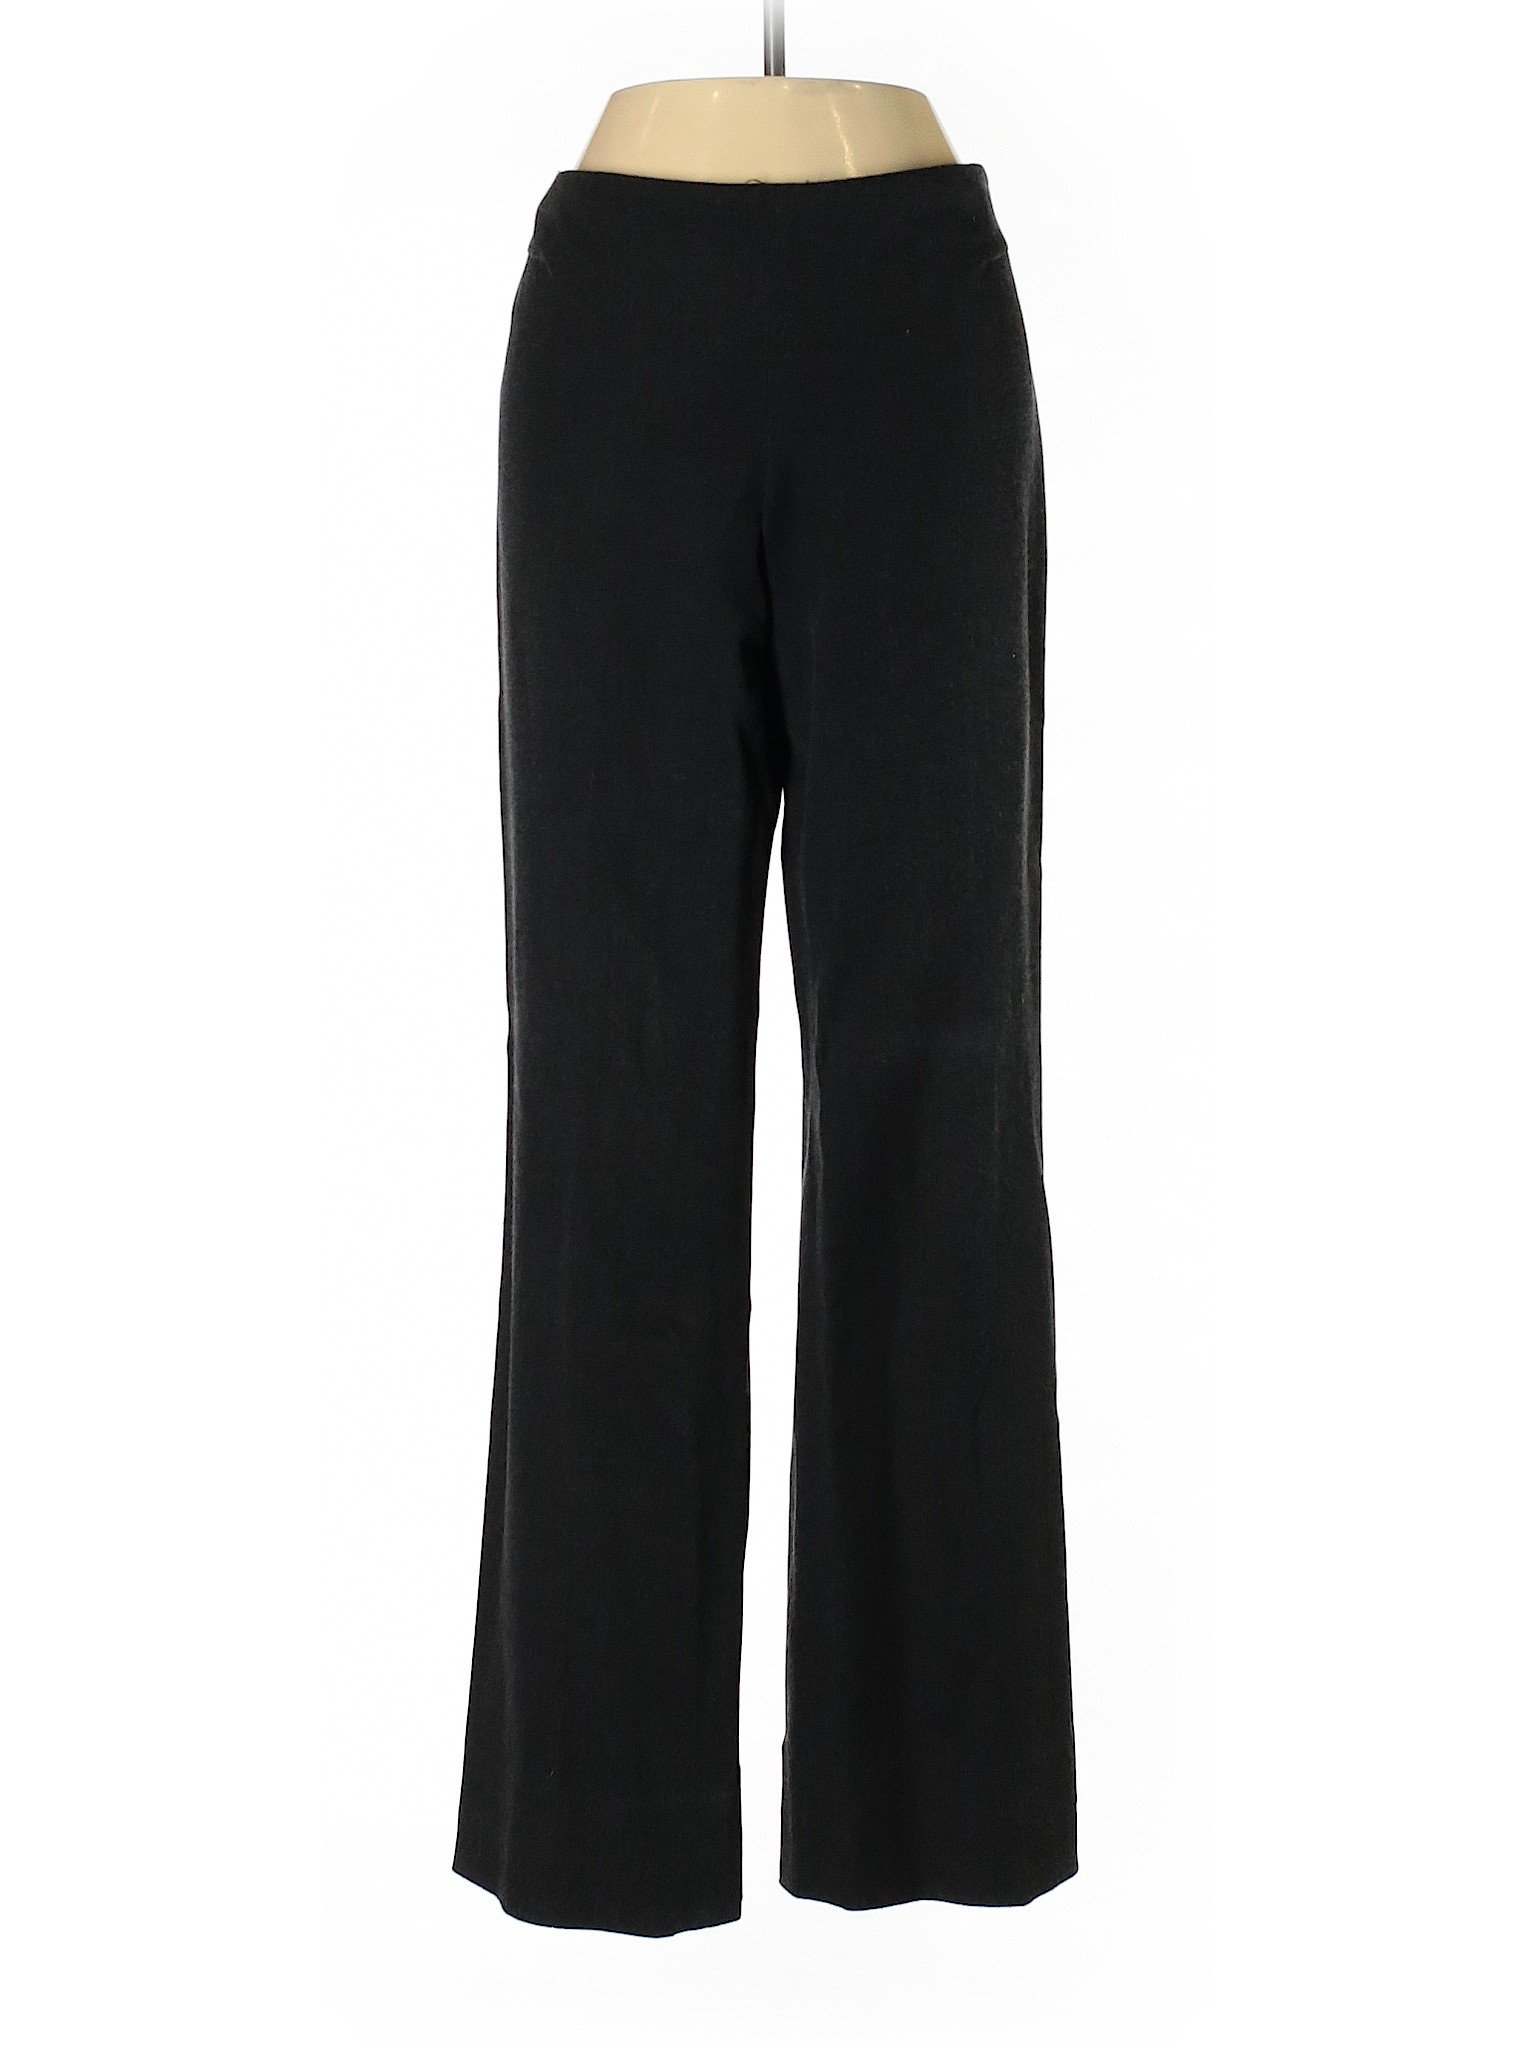 Gap Women Black Casual Pants 4 | eBay